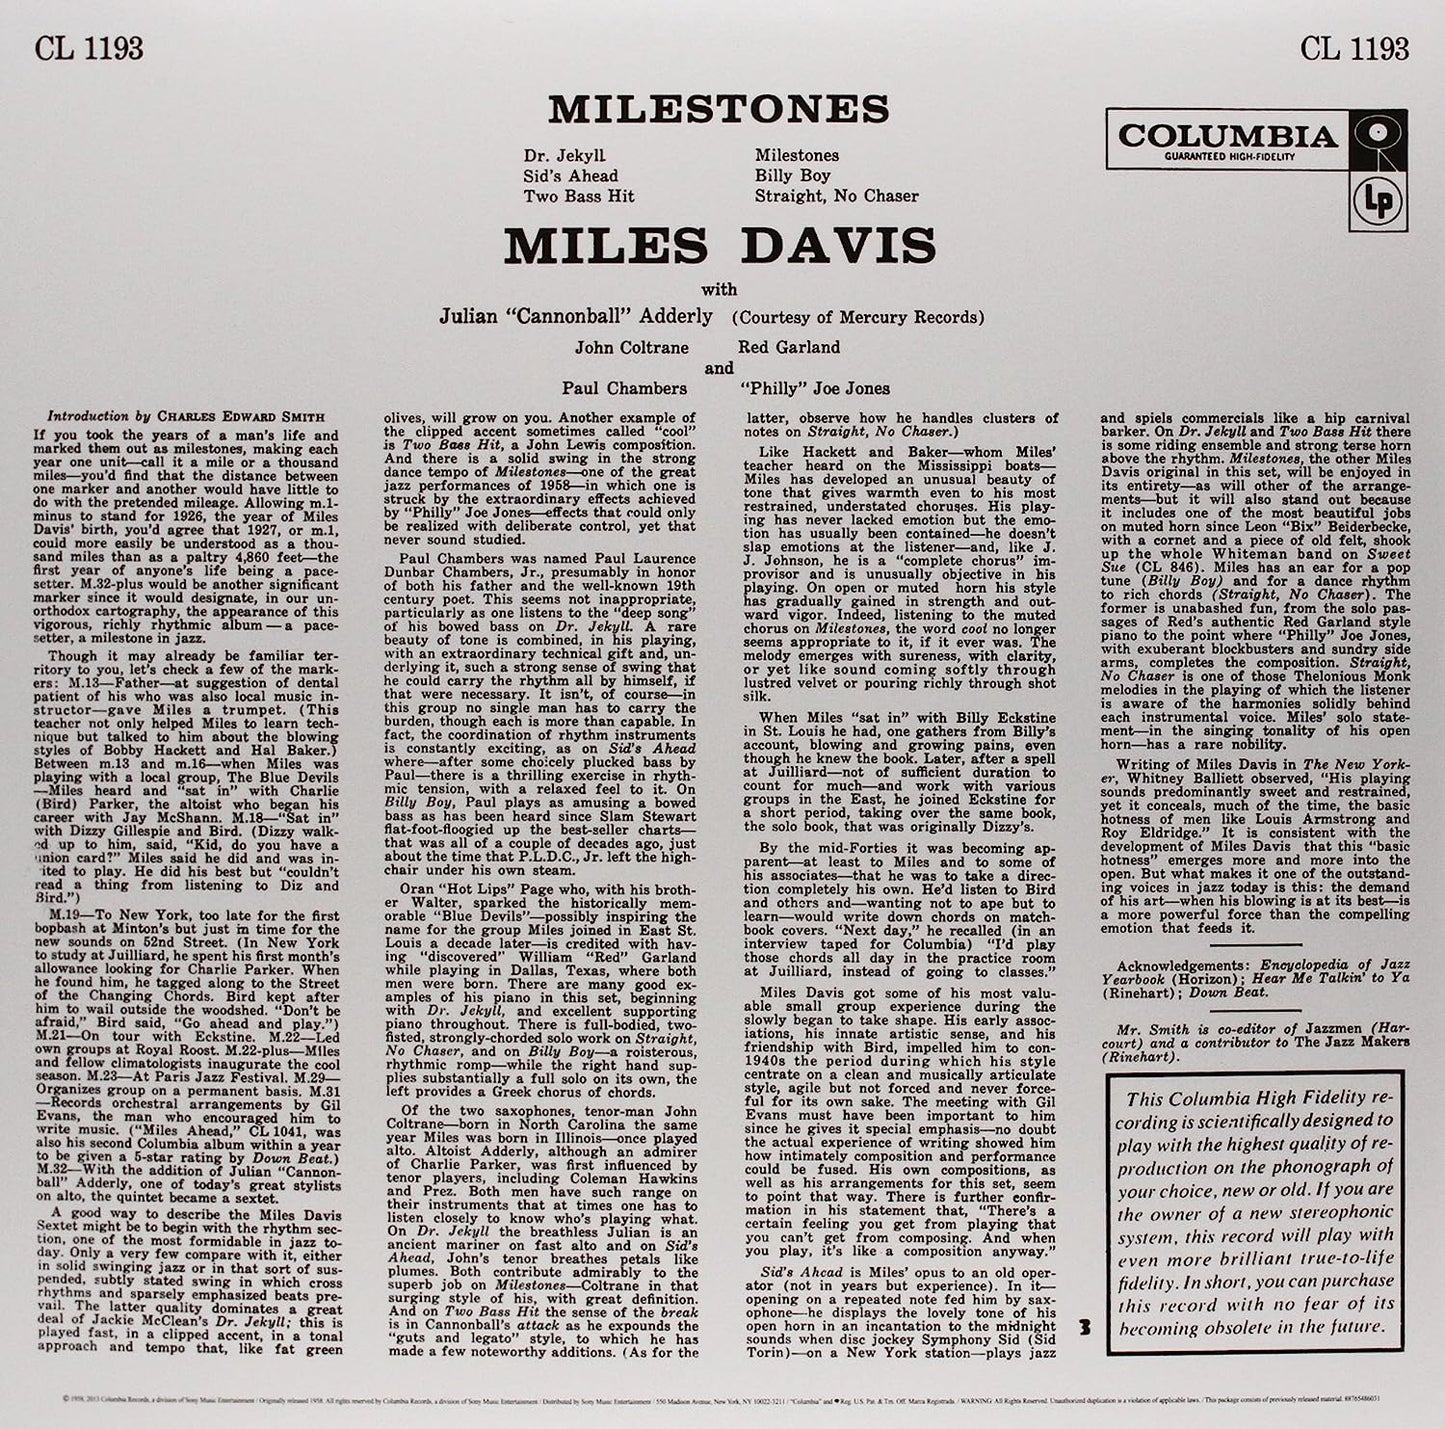 Milestones (Stereo Edition) (180 Gram Vinyl) Miles Davis